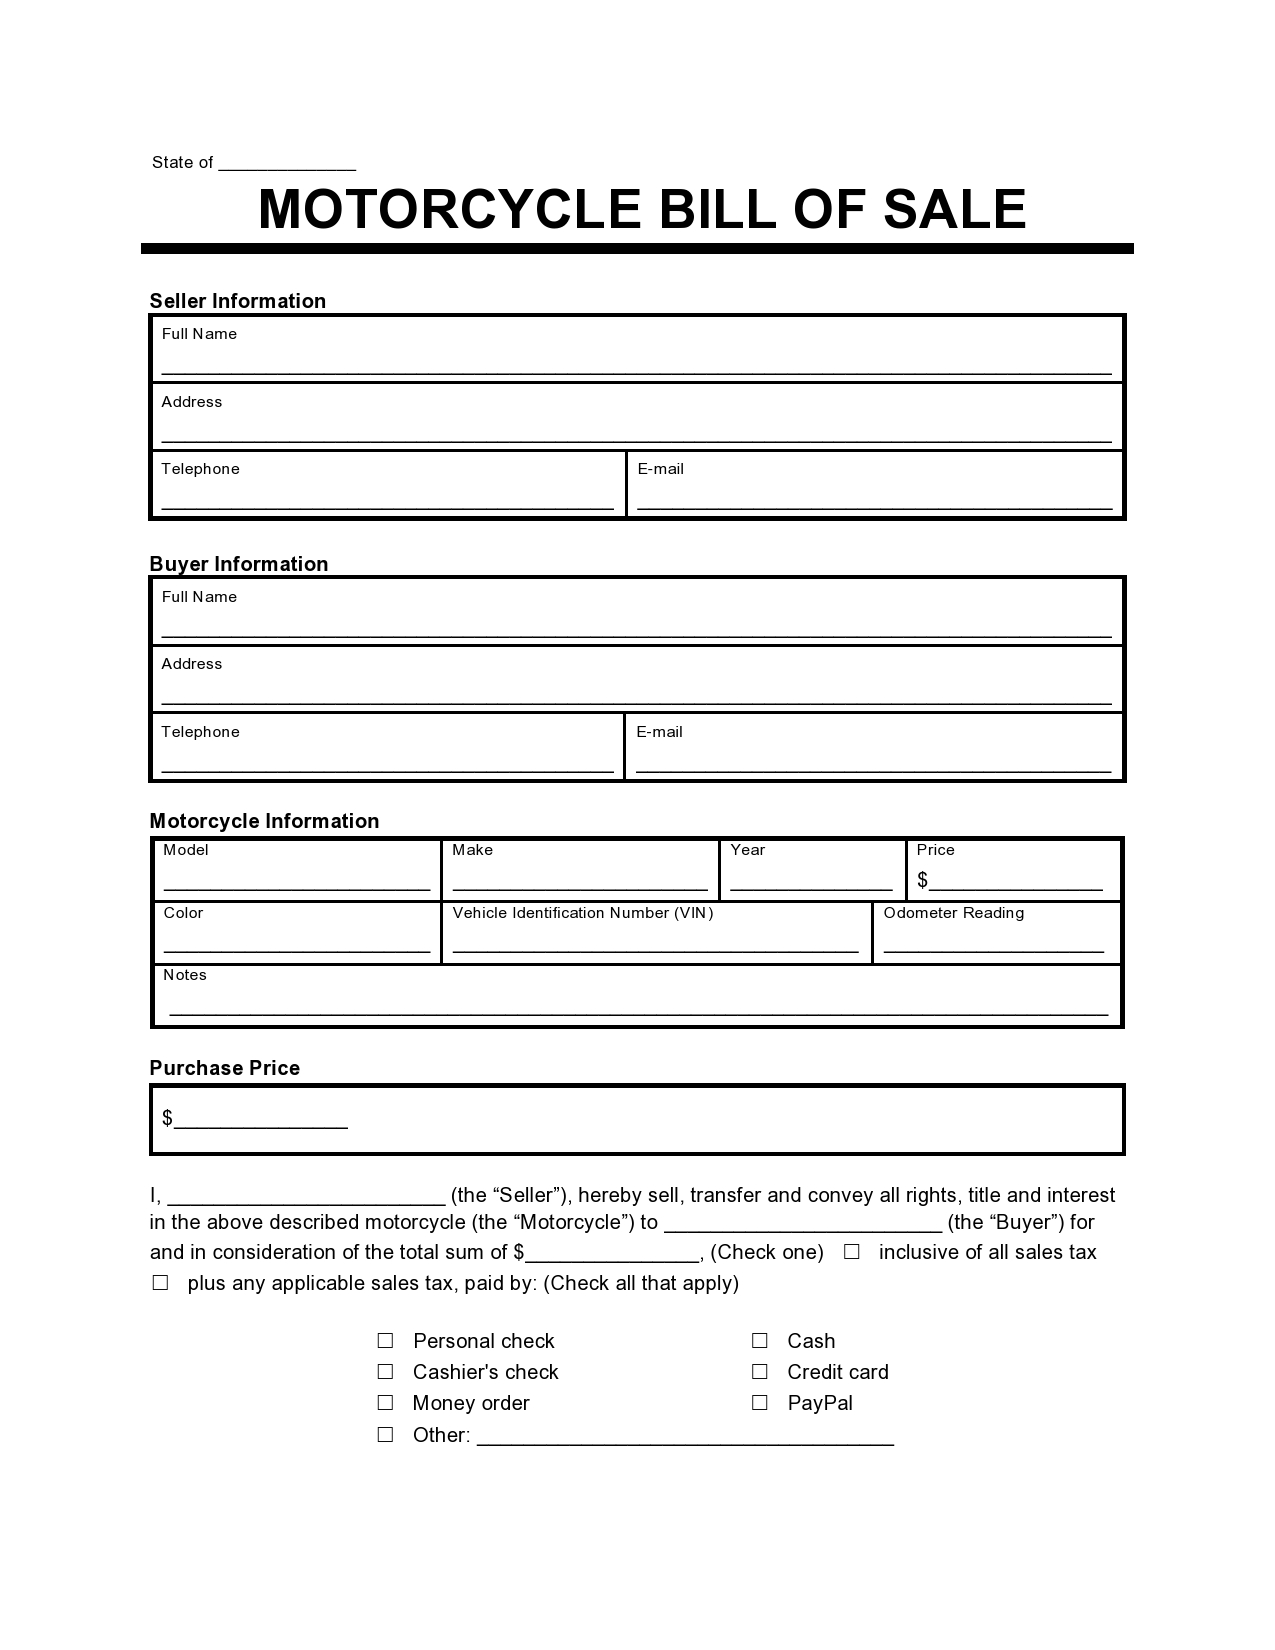 Free motorcycle bill of sale 04